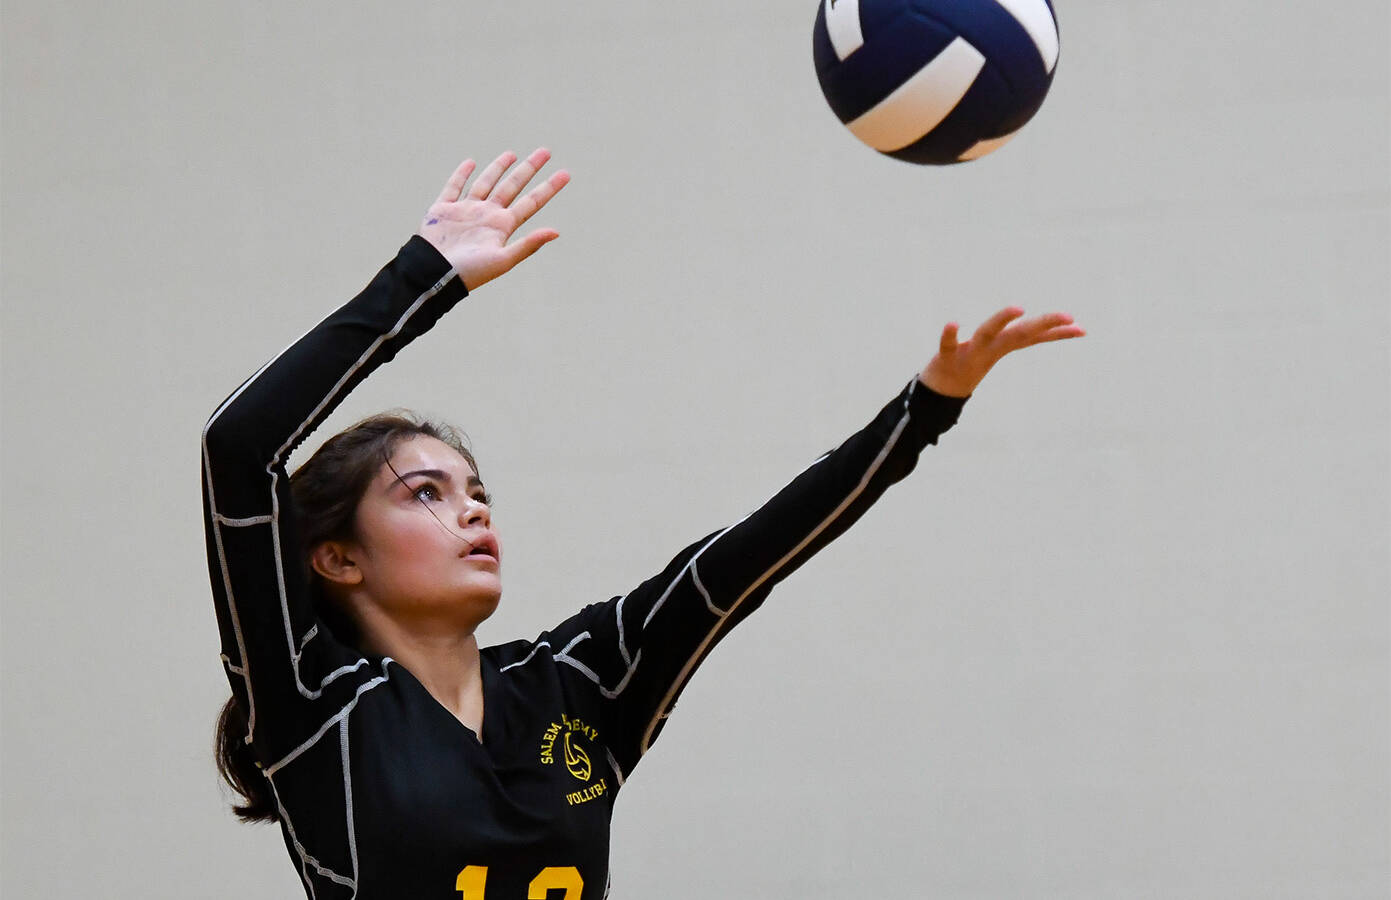 Salem volleyball player serves the ball